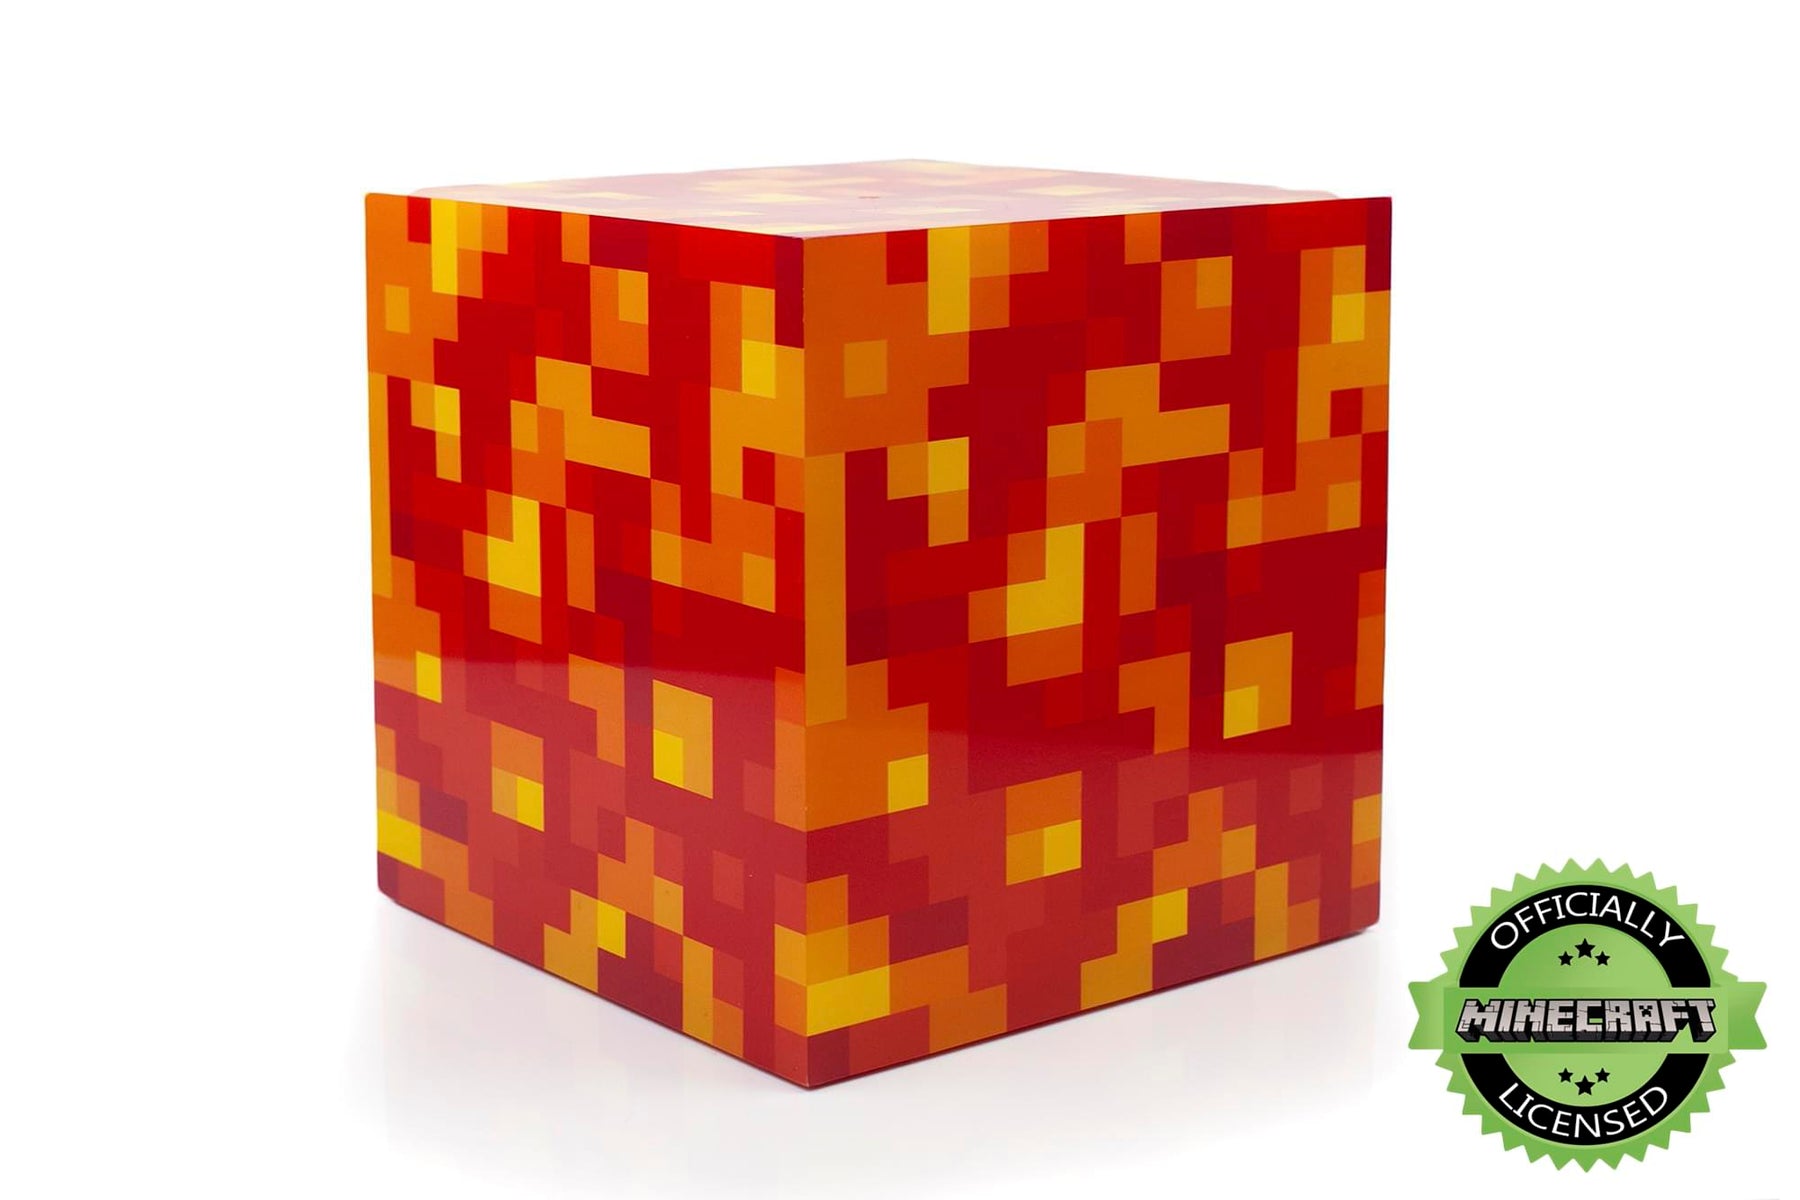 Minecraft Lava Block LED Mood Light | Minecraft Mood Lighting | 6 Inches Tall